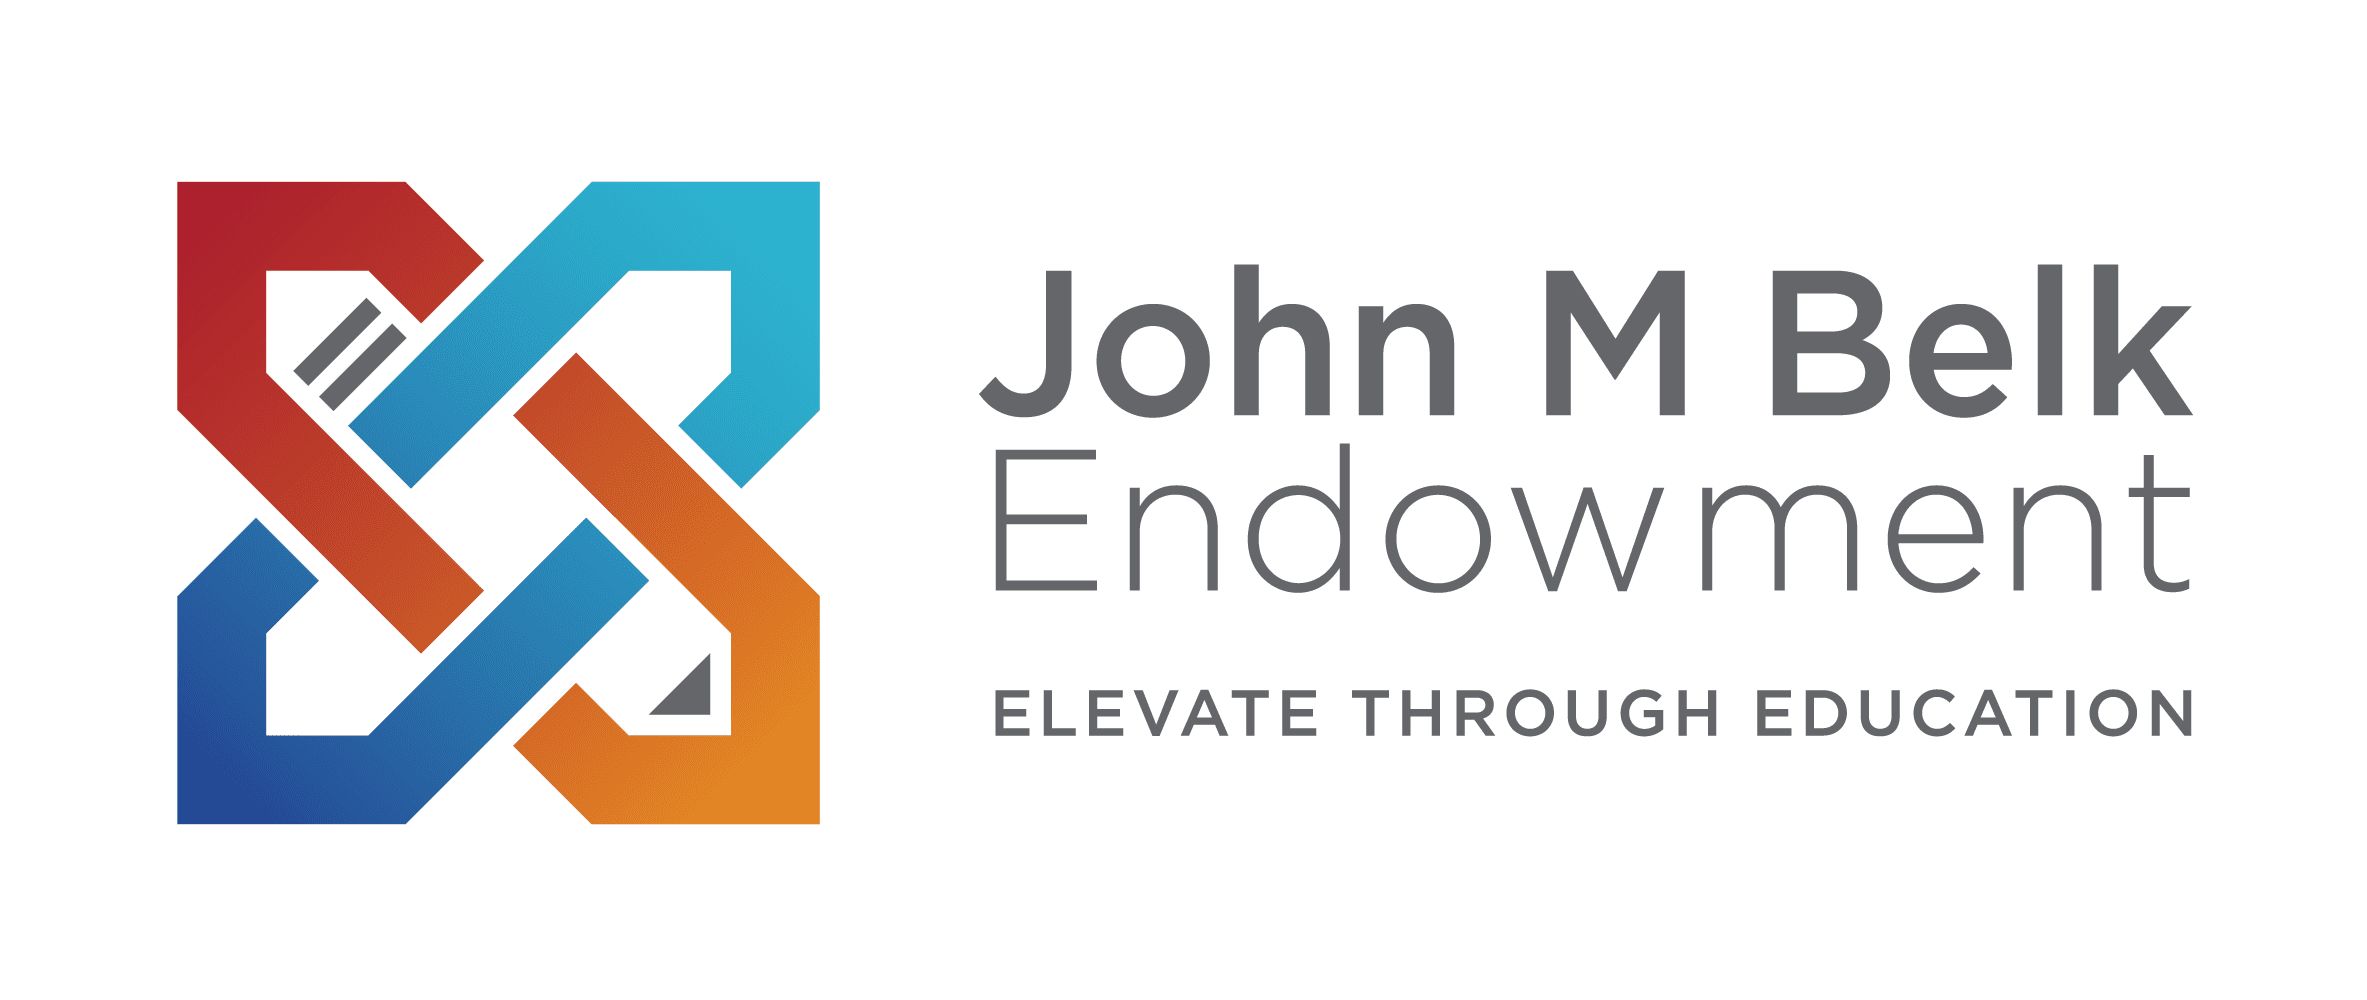 Jon M. Belk Endowment Logo